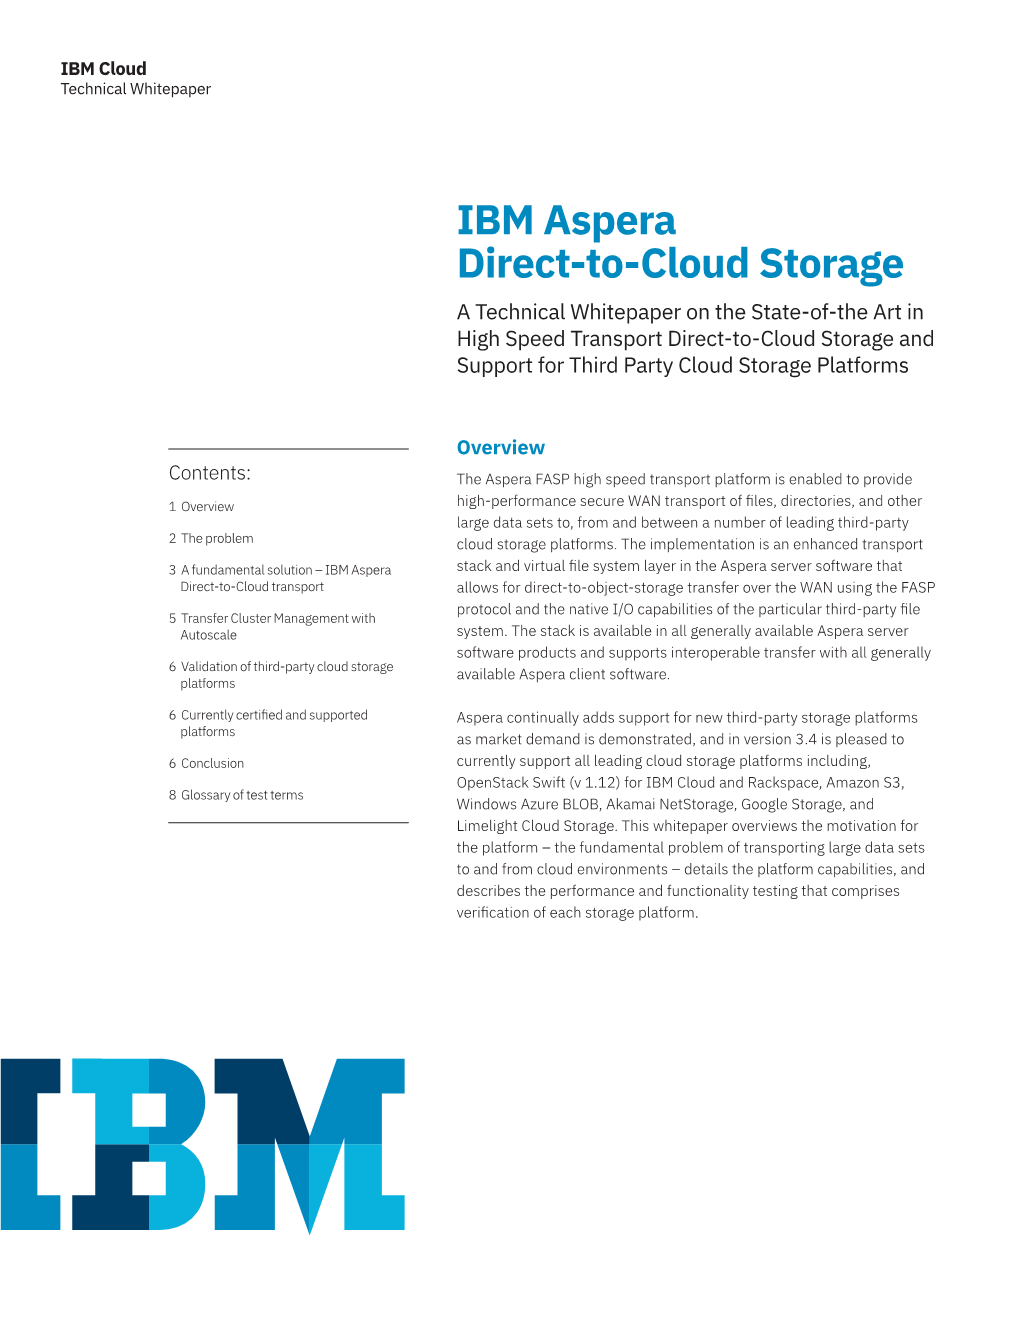 IBM Aspera Direct-To-Cloud Storage